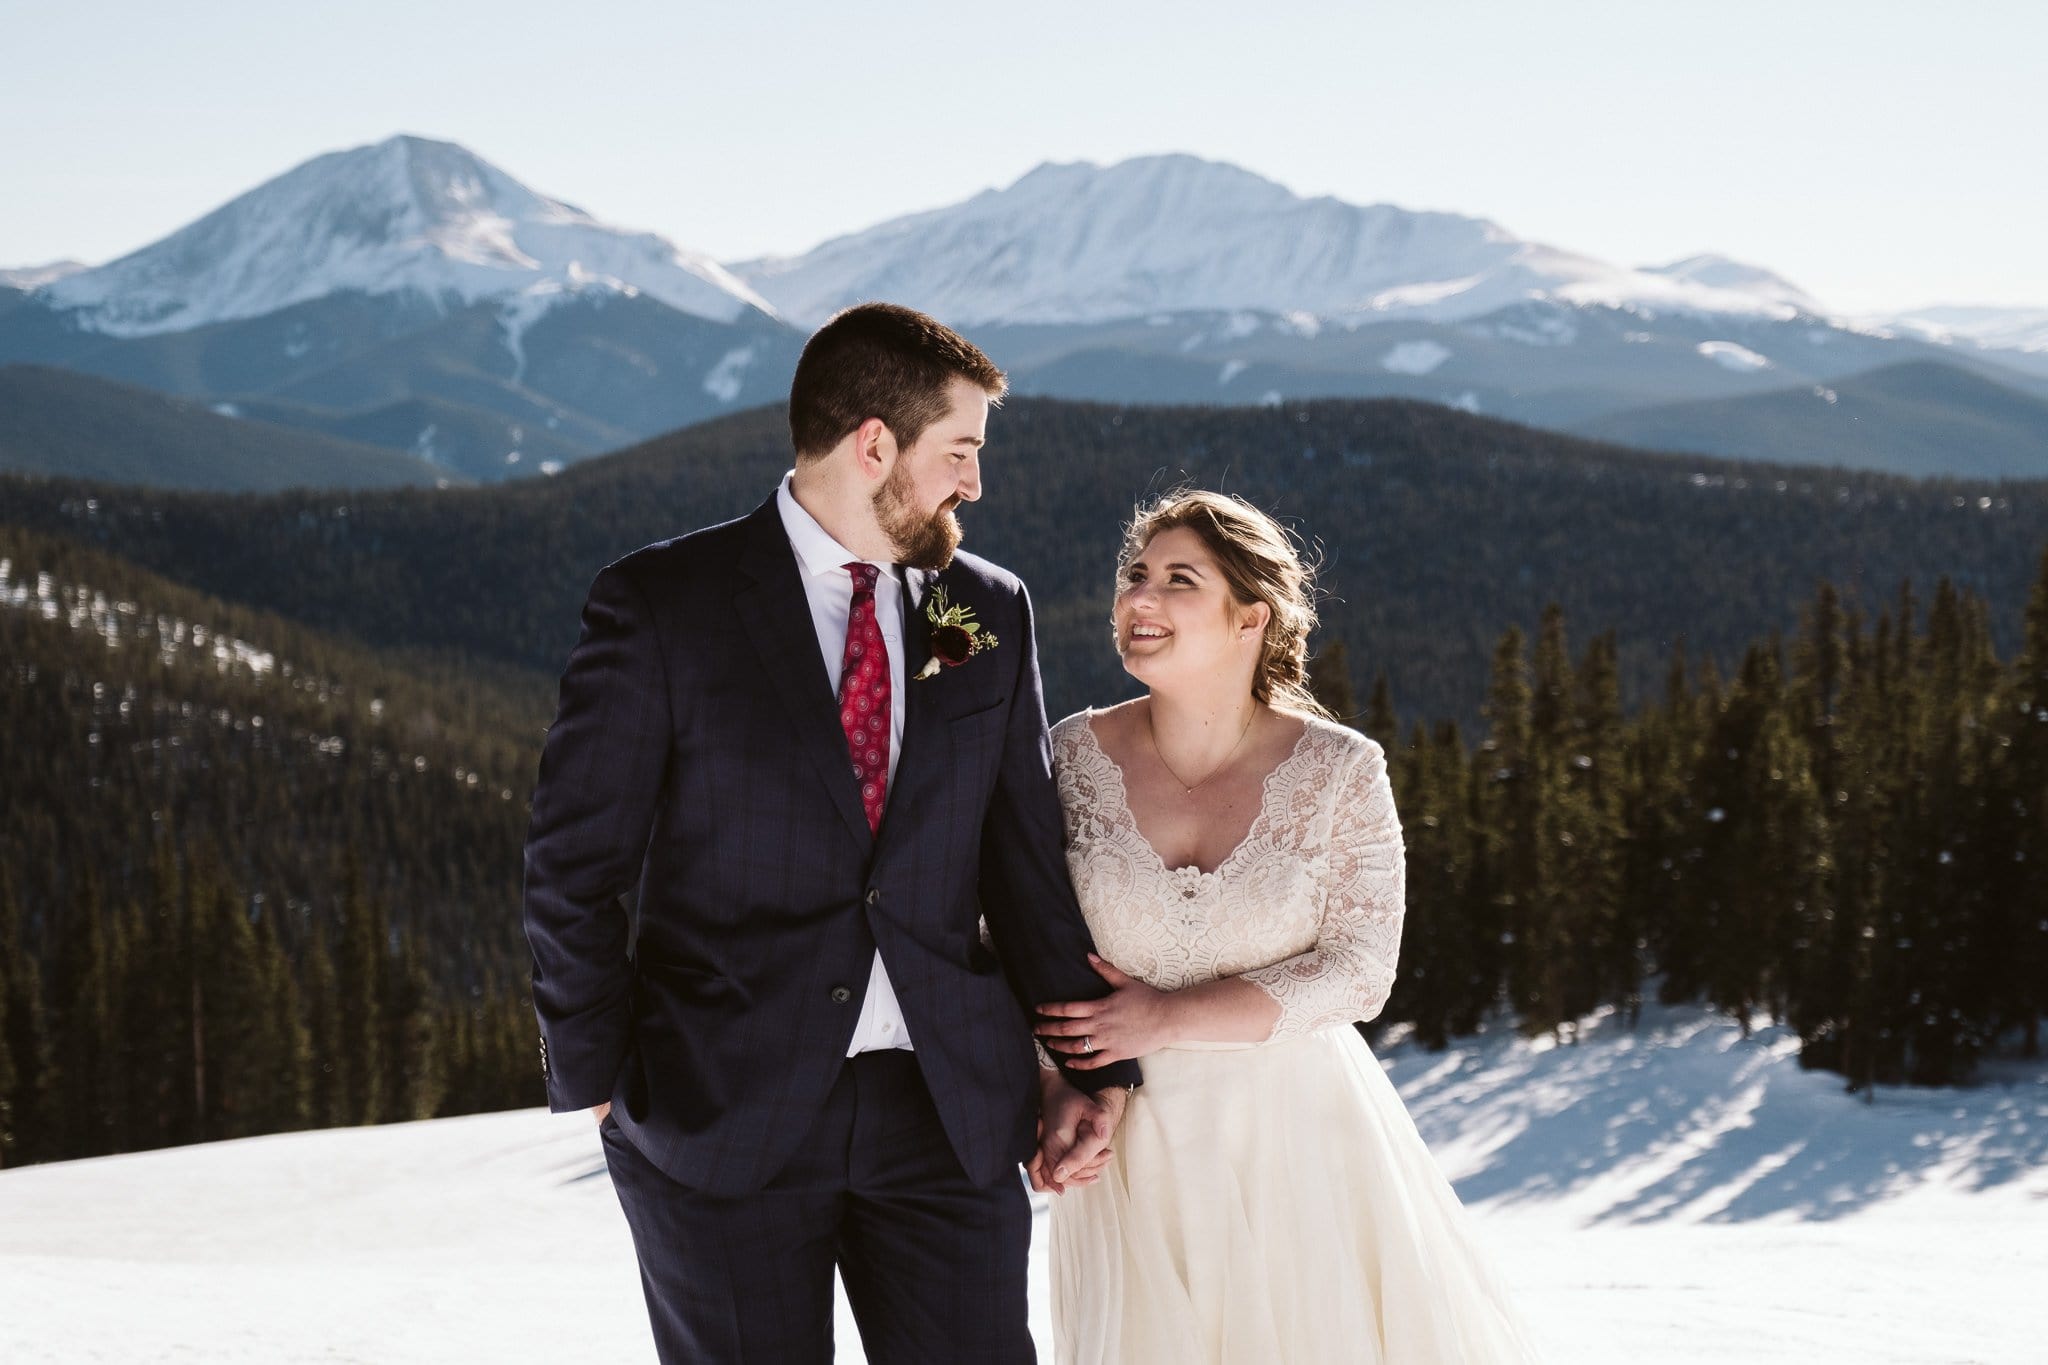 Bride and groom on the ski slopes at Keystone in Colroado.